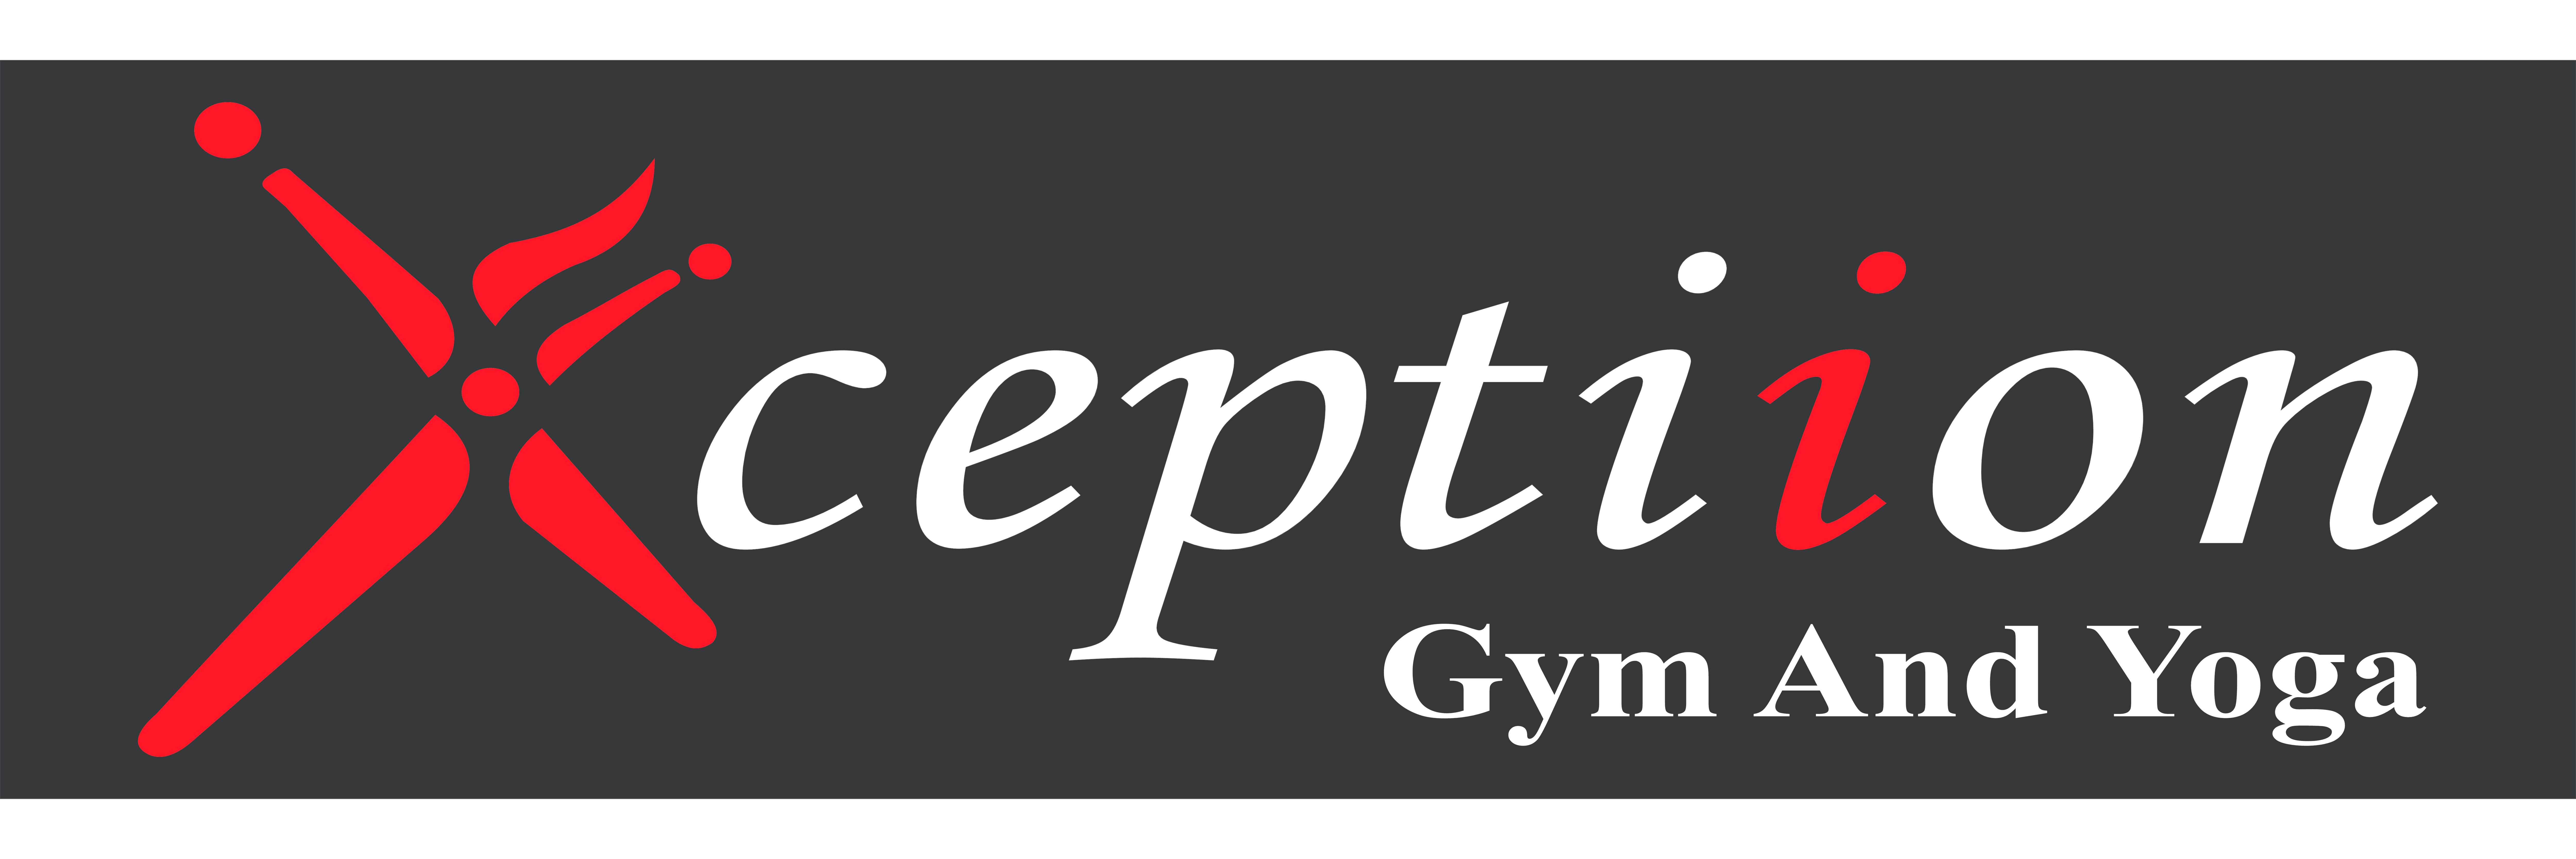 Xceptiion Gym And Yoga